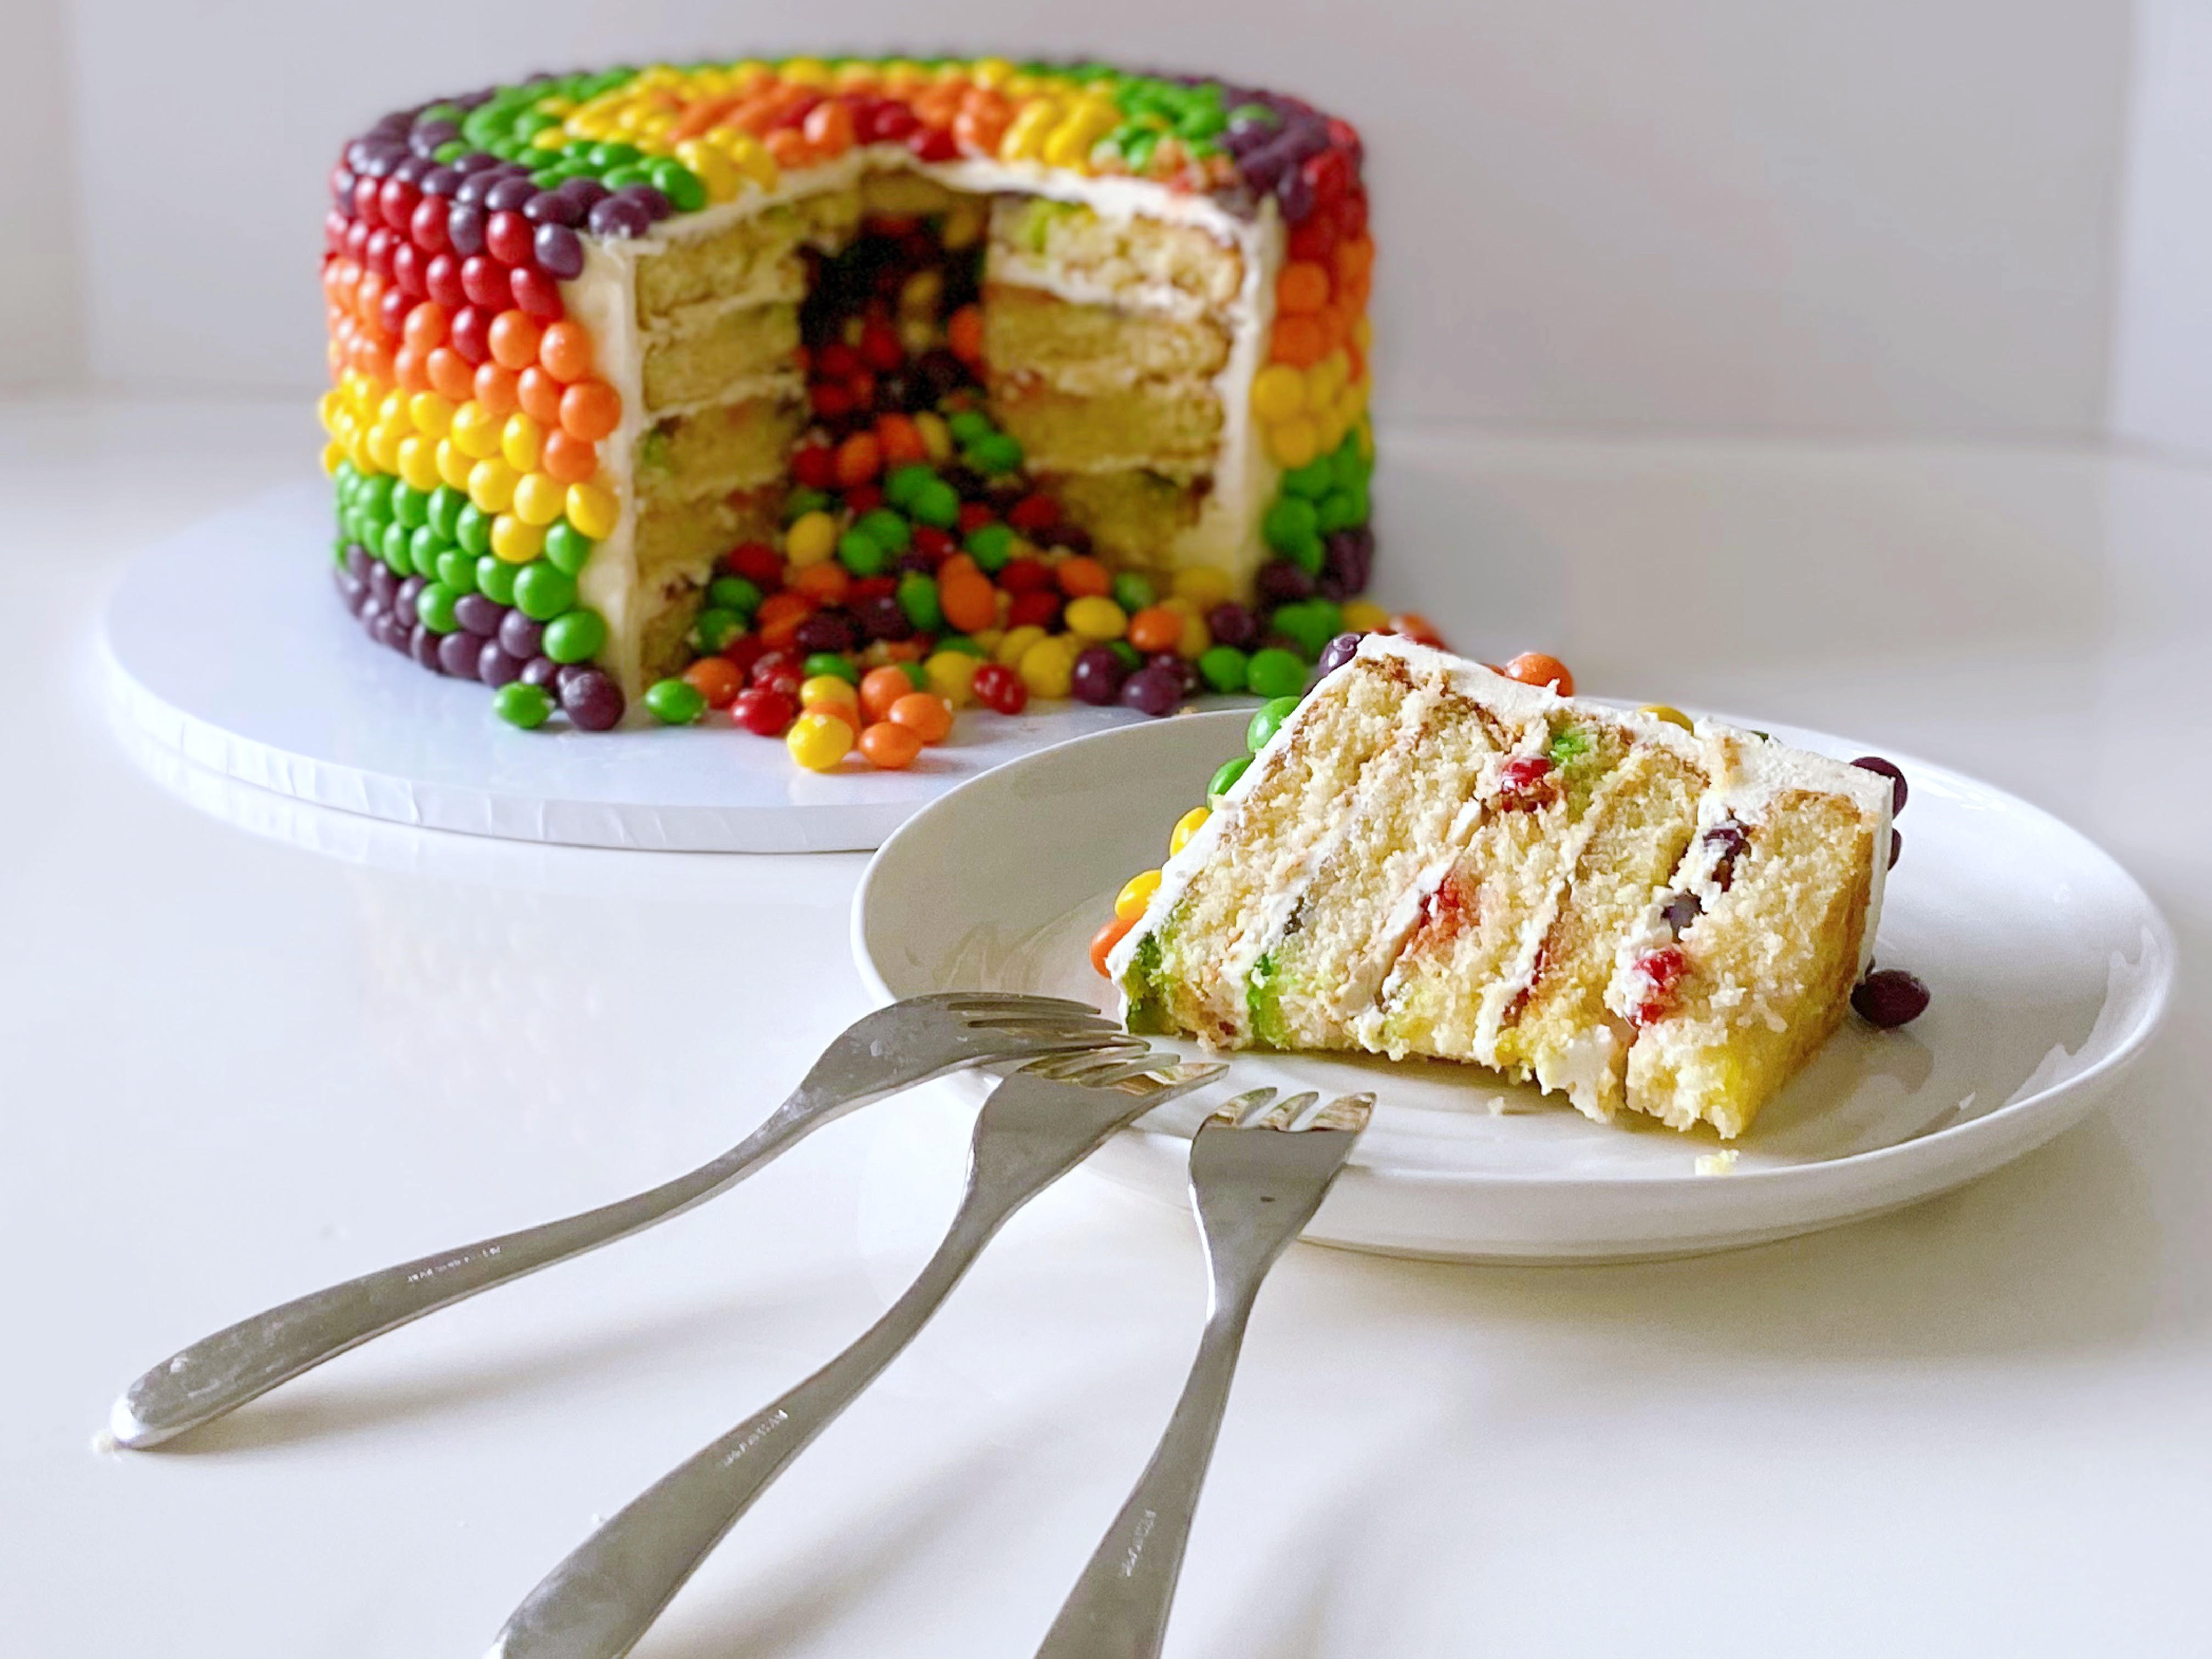 Skittles Piñata Rainbow Layer Cake